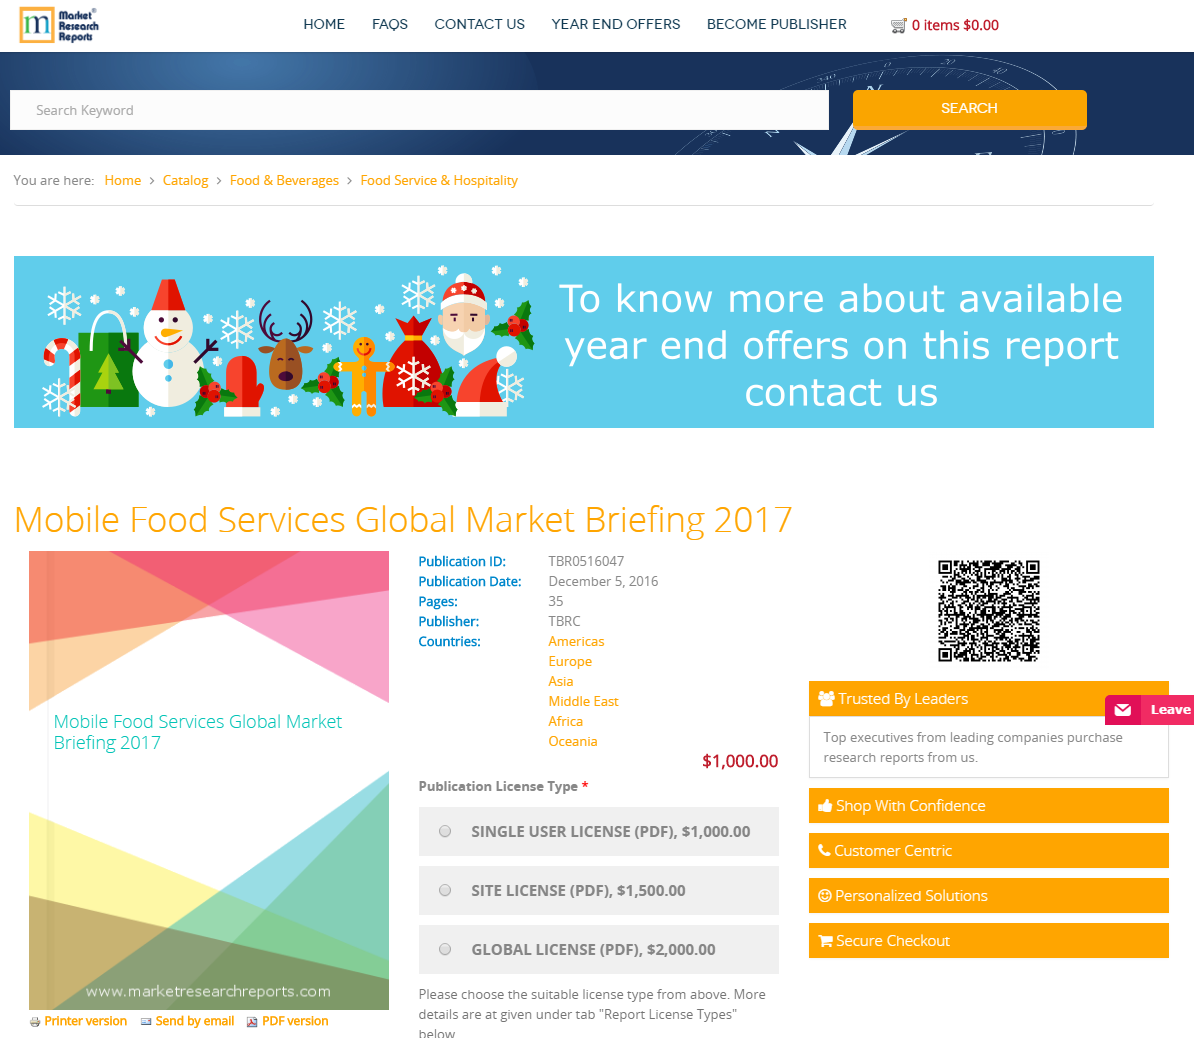 Mobile Food Services Global Market Briefing 2017